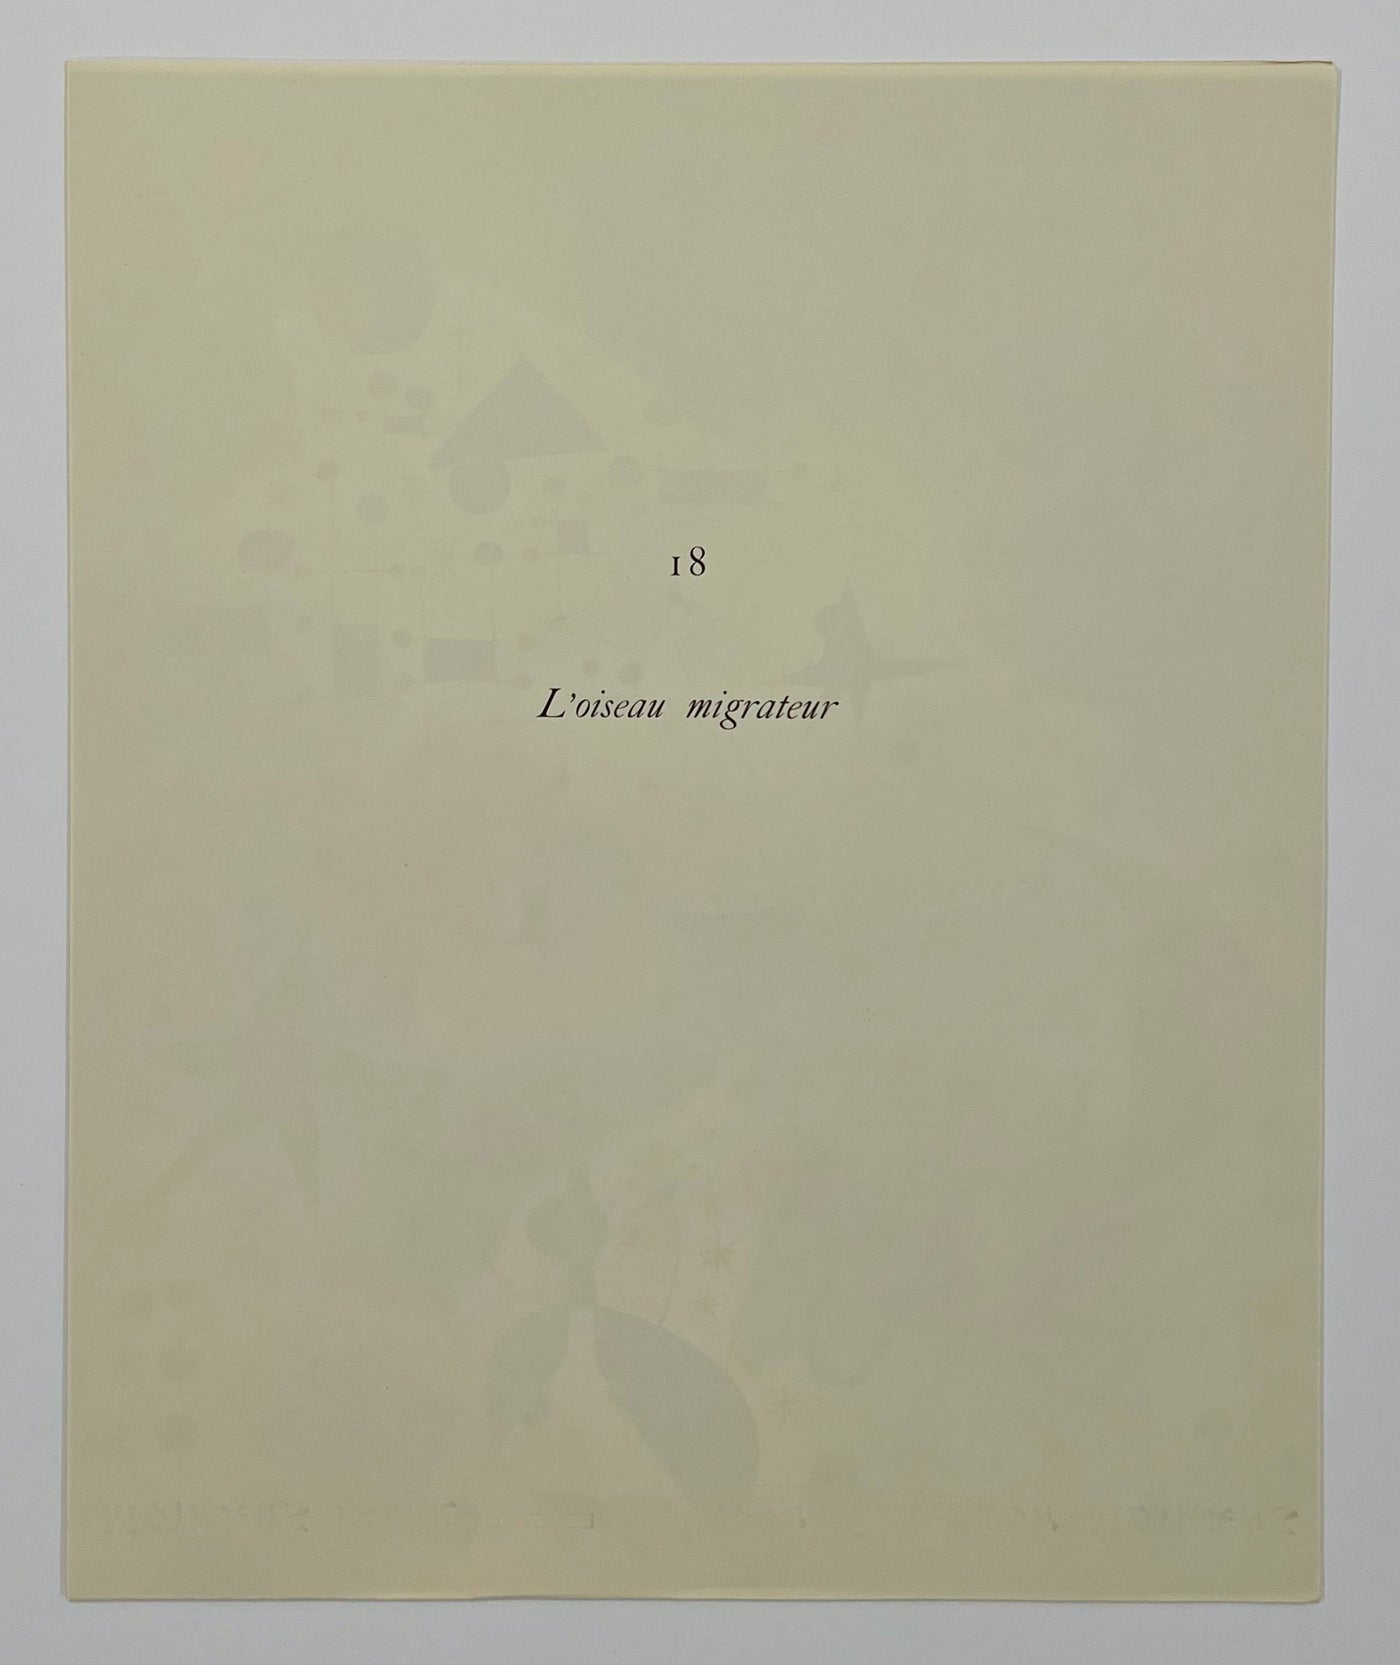 Joan Miro (after) L'oiseau migrateur (The Migratory Bird), Plate XVIII (Cramer No. 58) 1959